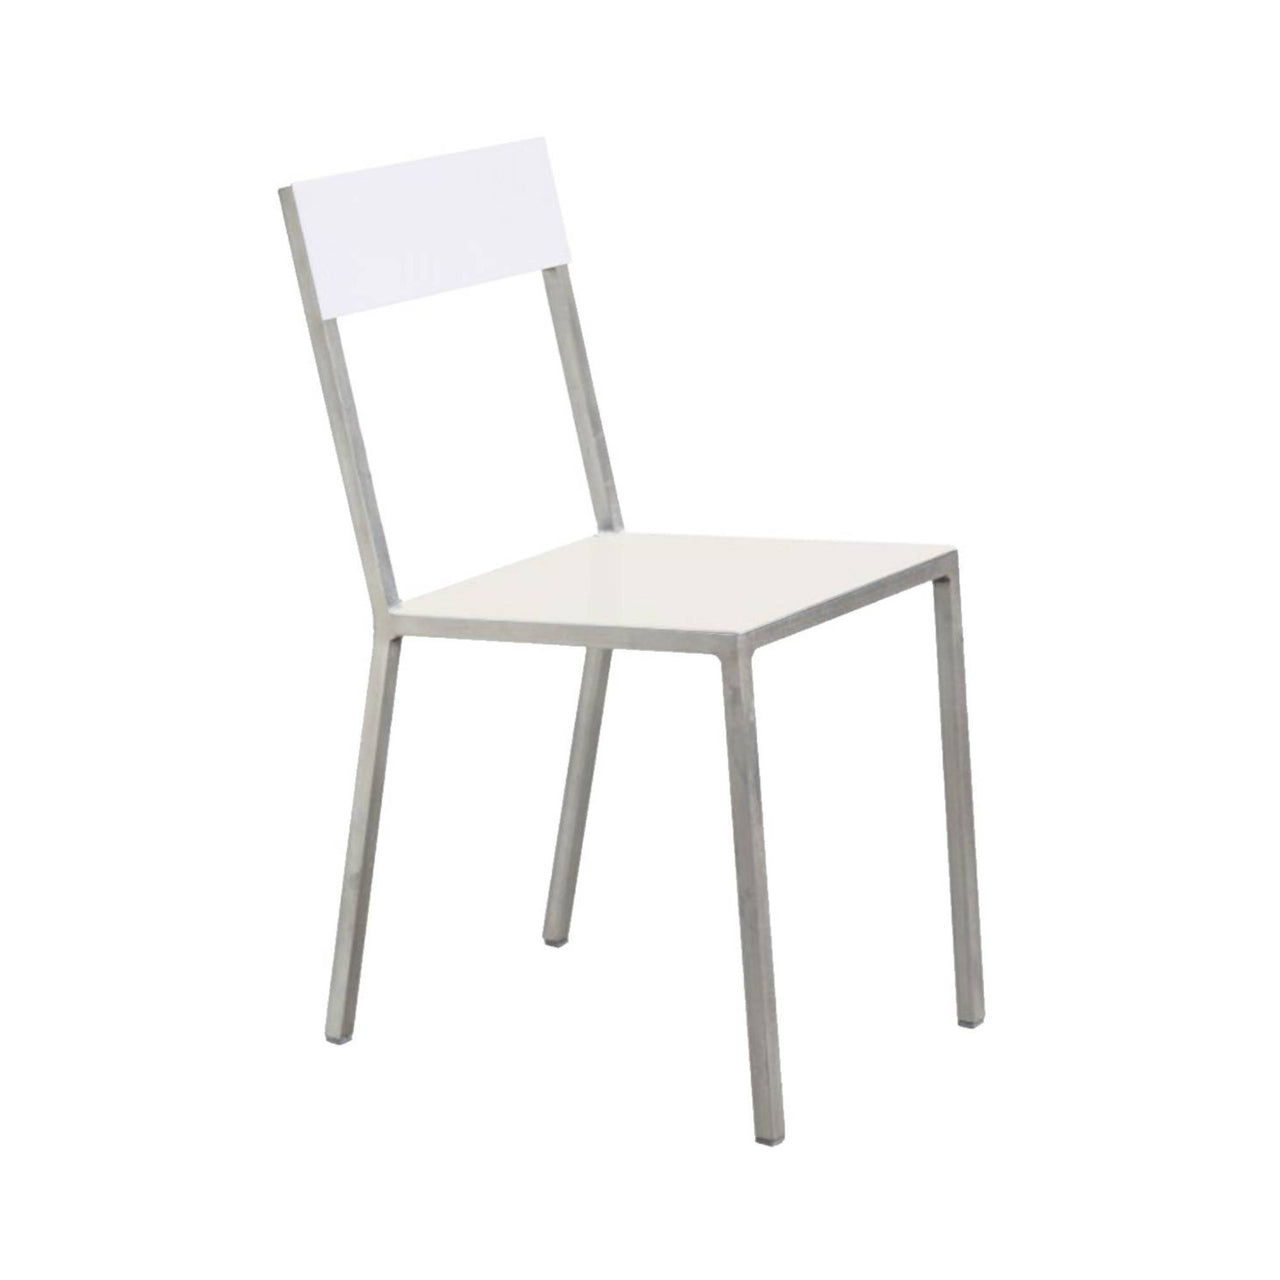 Alu Chair: Ivory + White + Aluminum